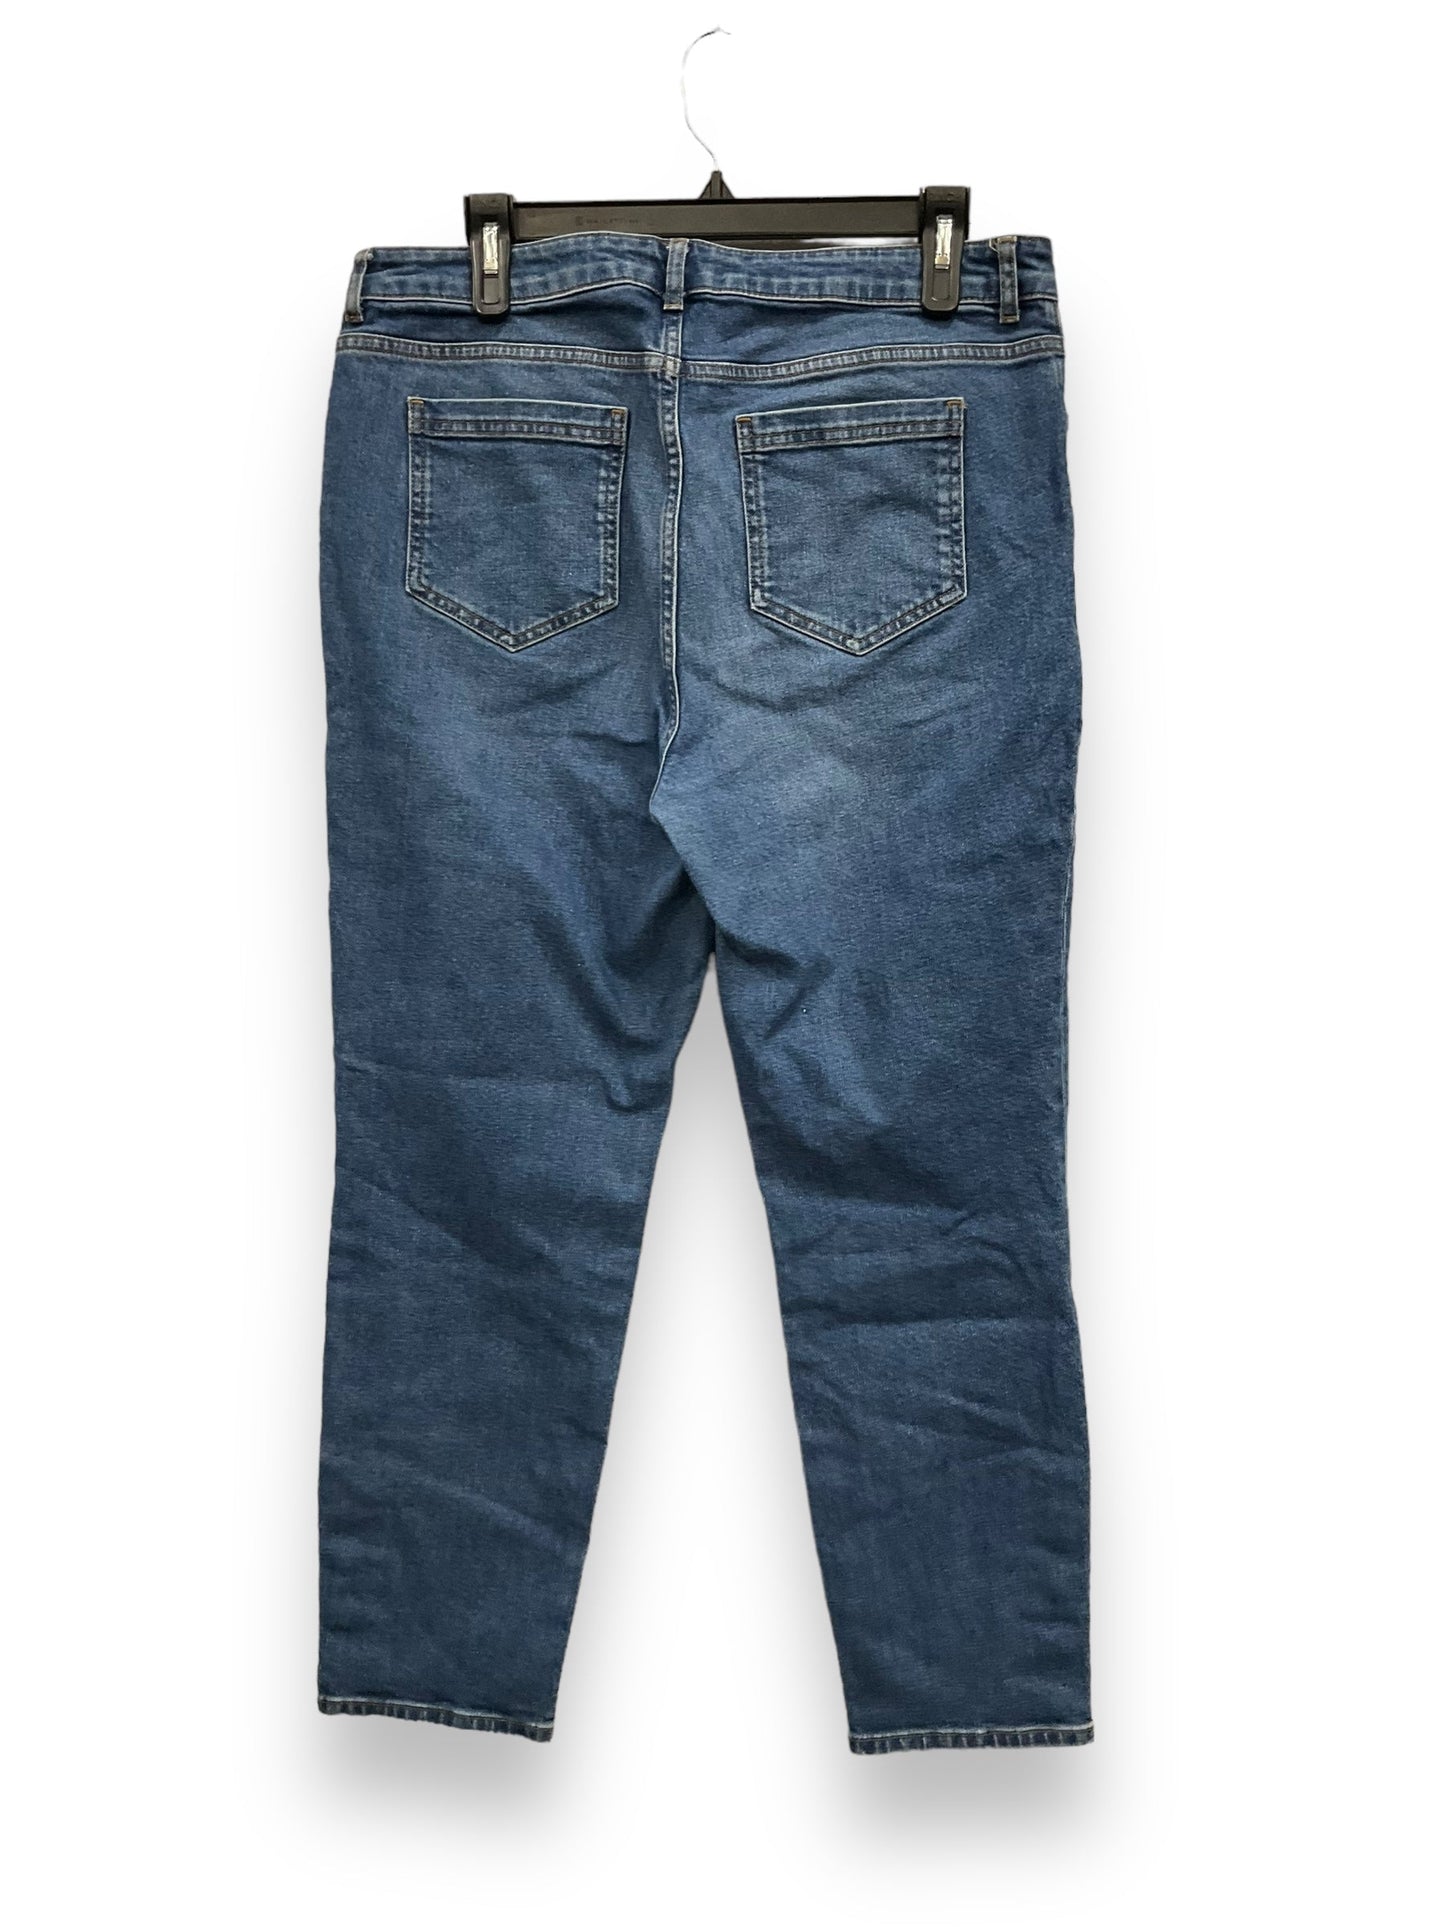 Jeans Skinny By Boden  Size: 2